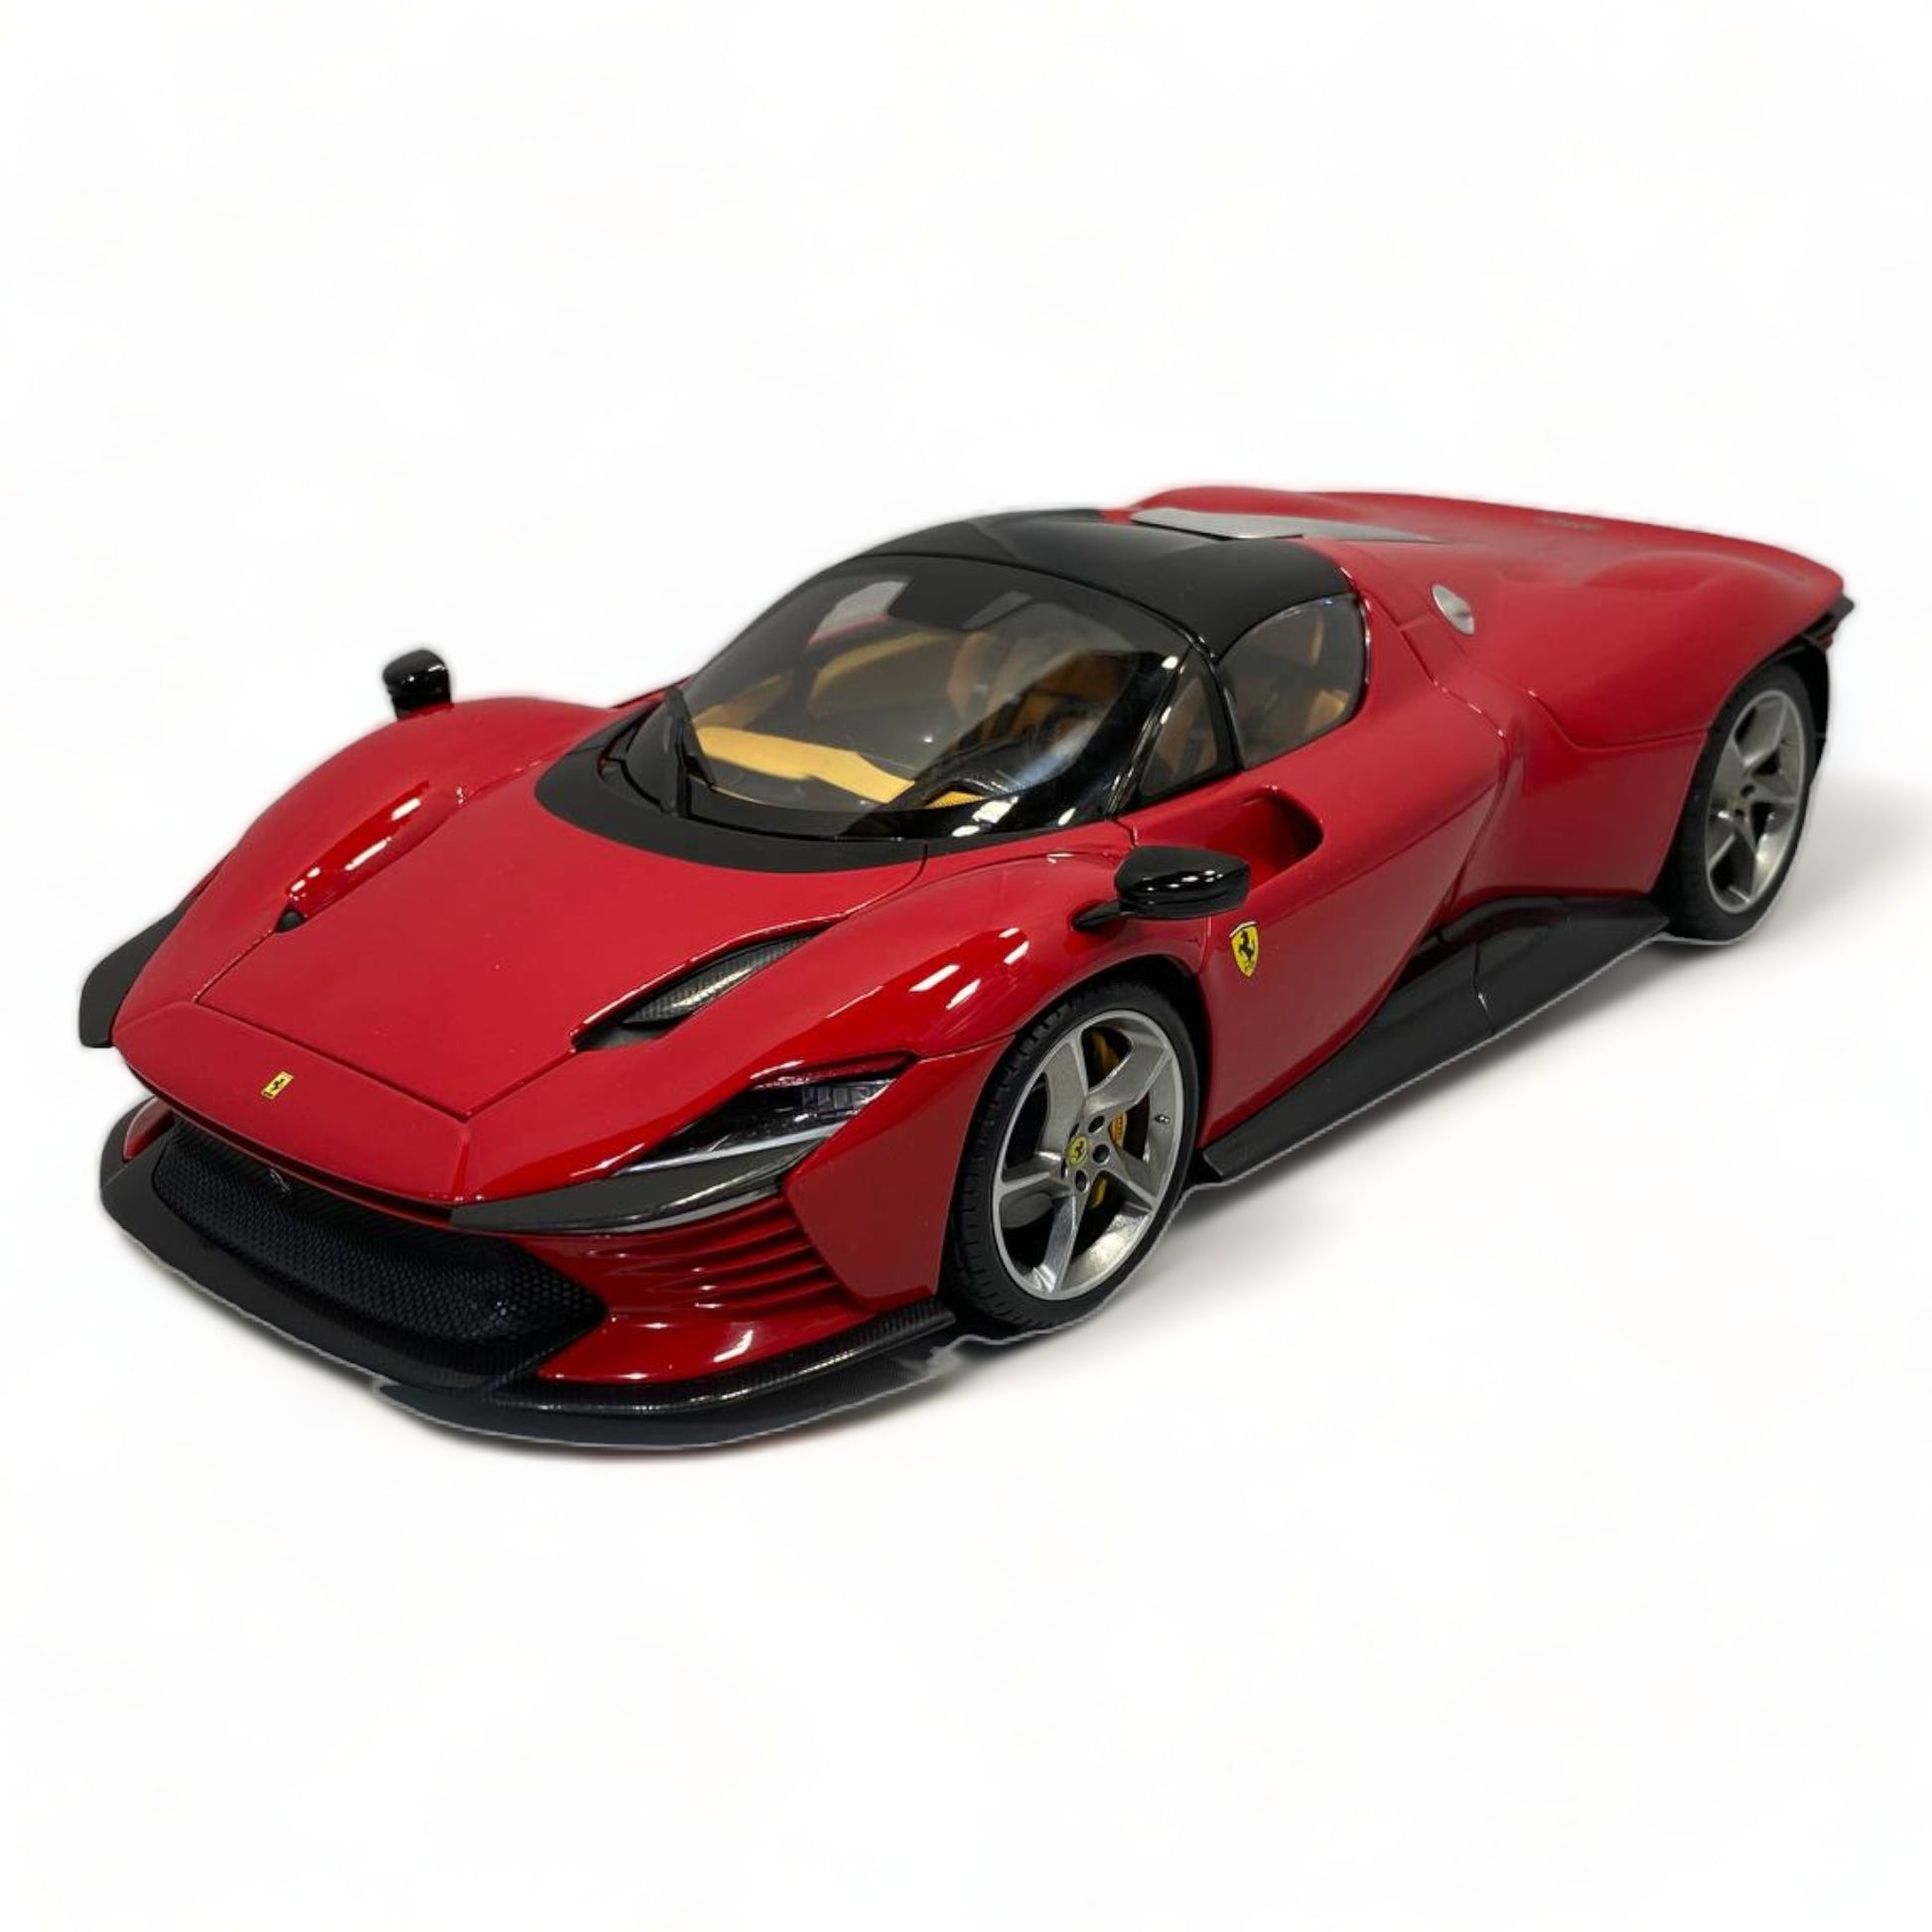 Bburago Ferrari Daytona SP3 - 1/18 Diecast Metal Full Opening, Striking Red|Sold in Dturman.com Dubai UAE.